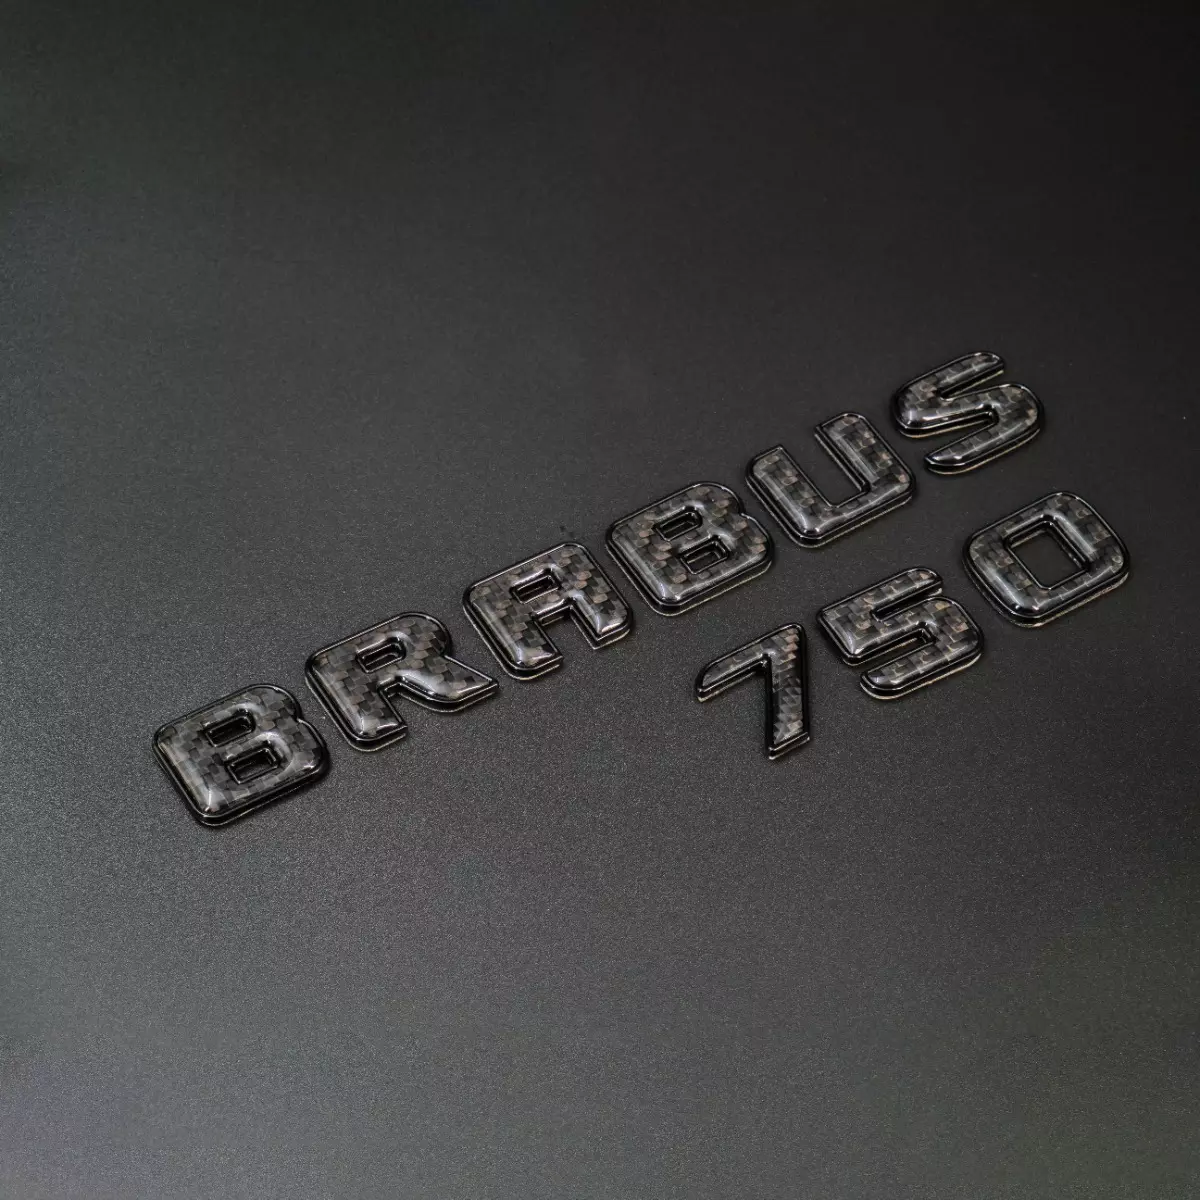 Black Metal with Carbon Brabus 750 Badges Emblems Set for Mercedes-Benz Vehicles